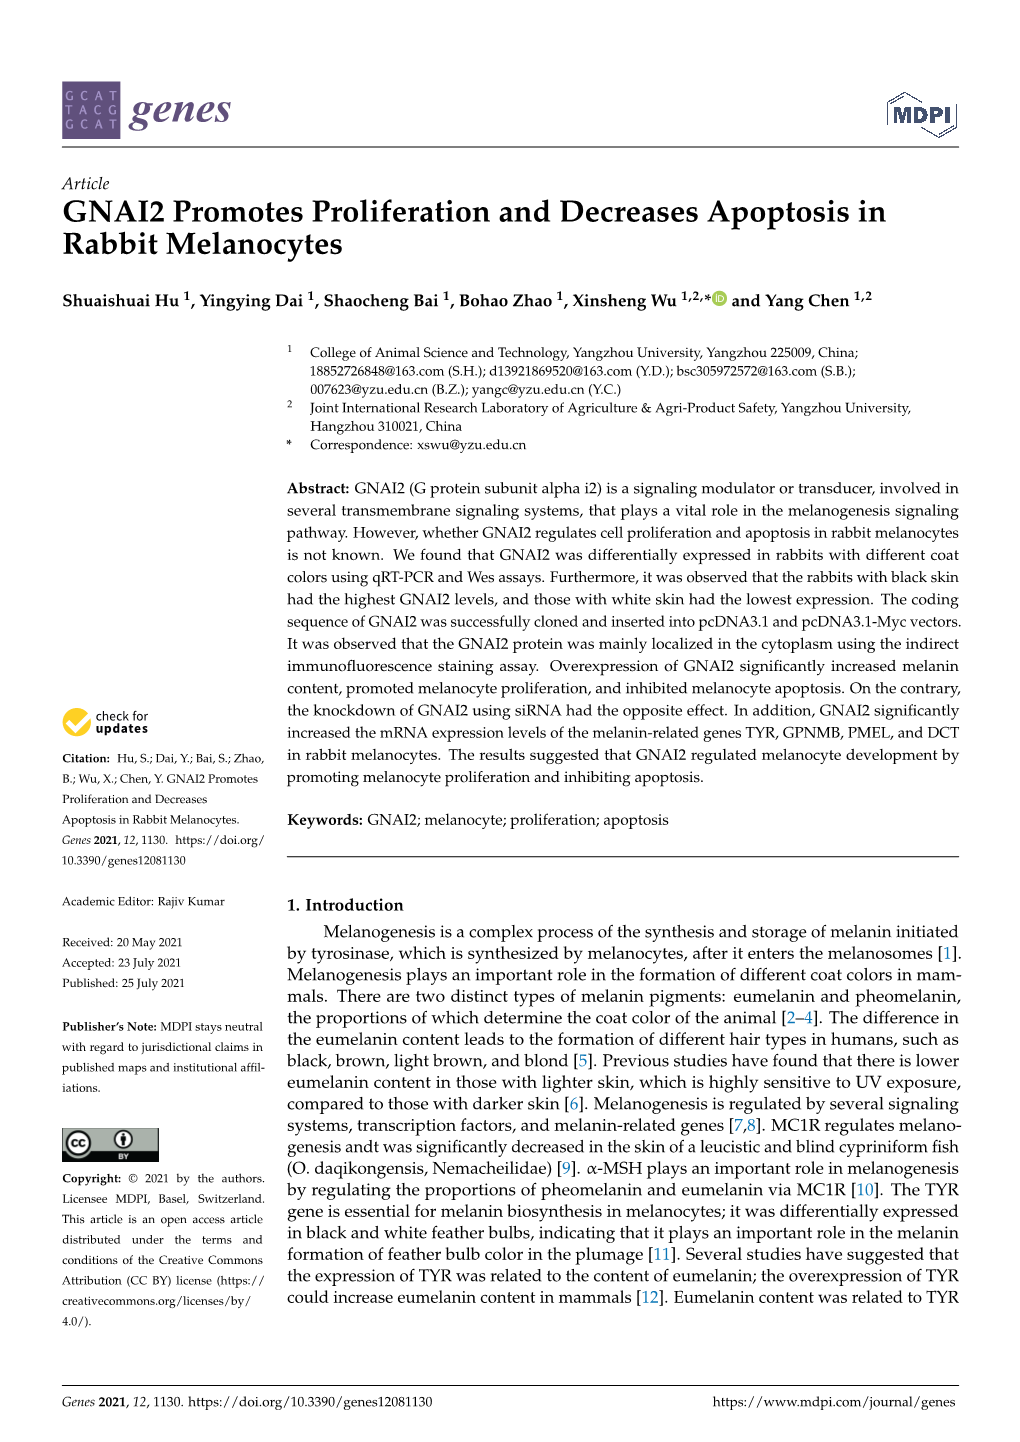 GNAI2 Promotes Proliferation and Decreases Apoptosis in Rabbit Melanocytes